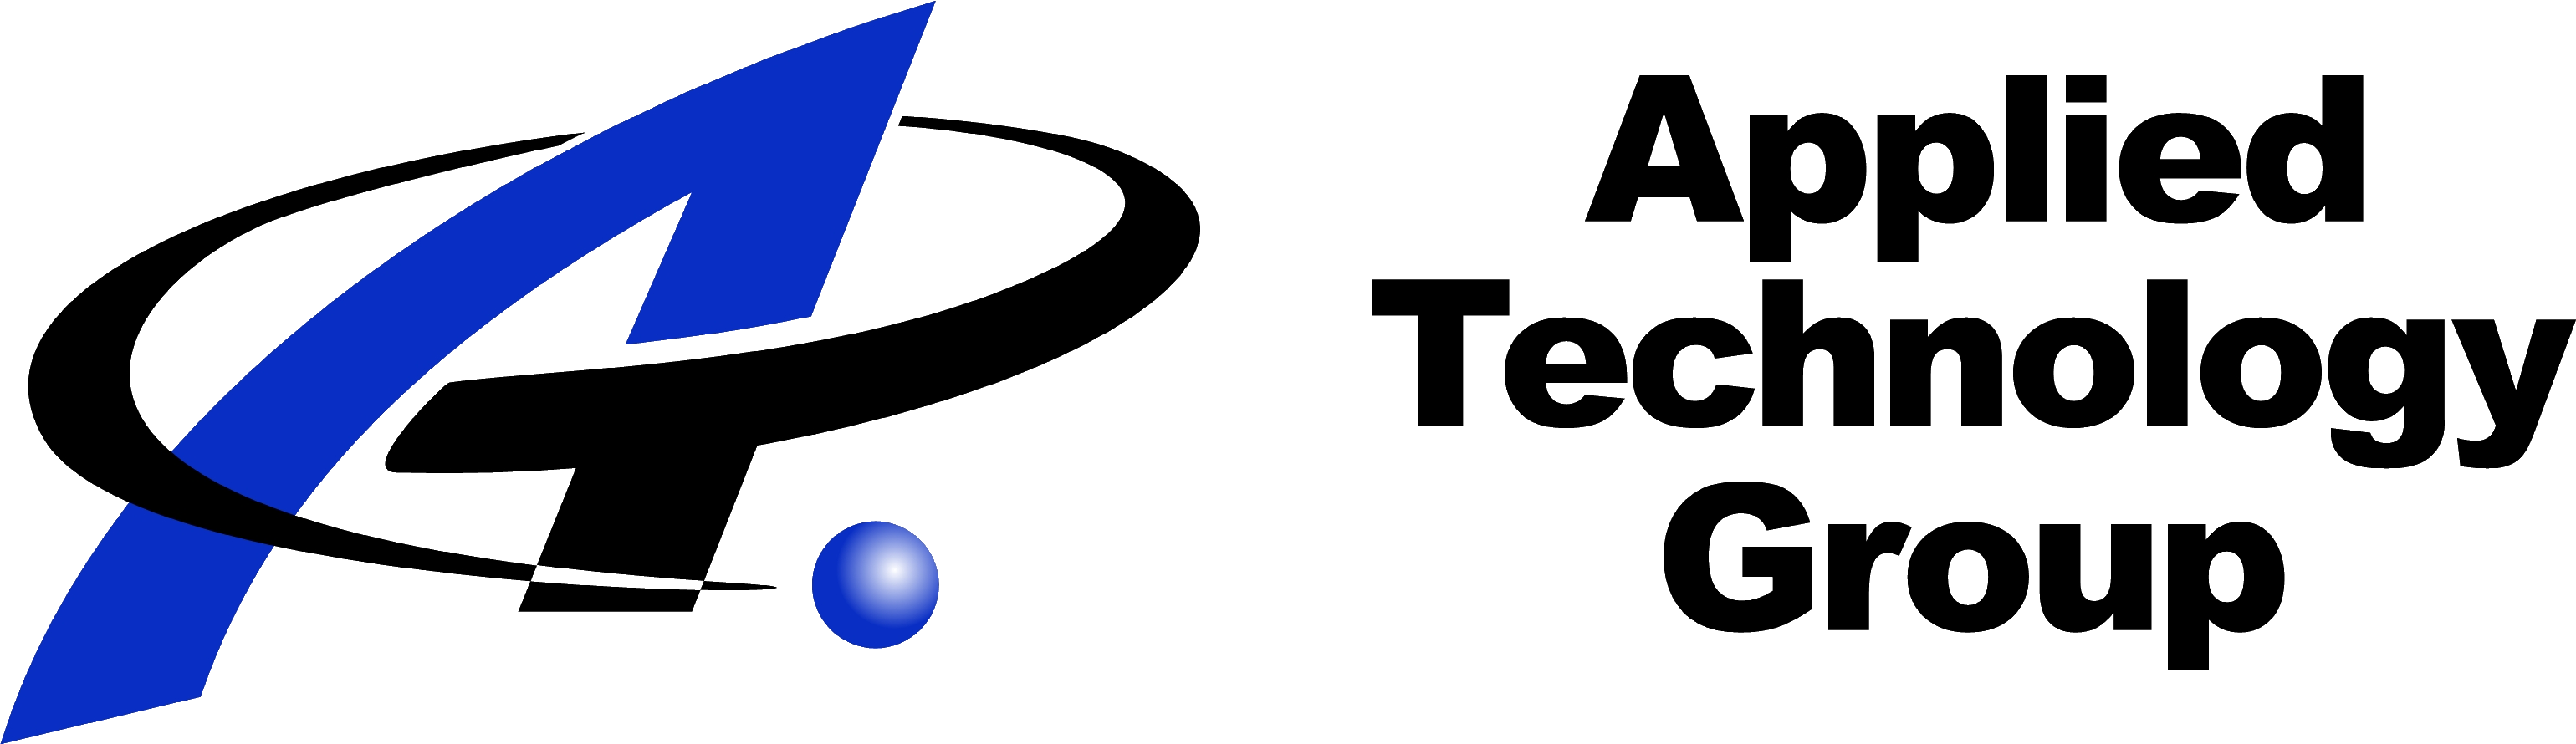 ATG logo - 2010 - Transparent